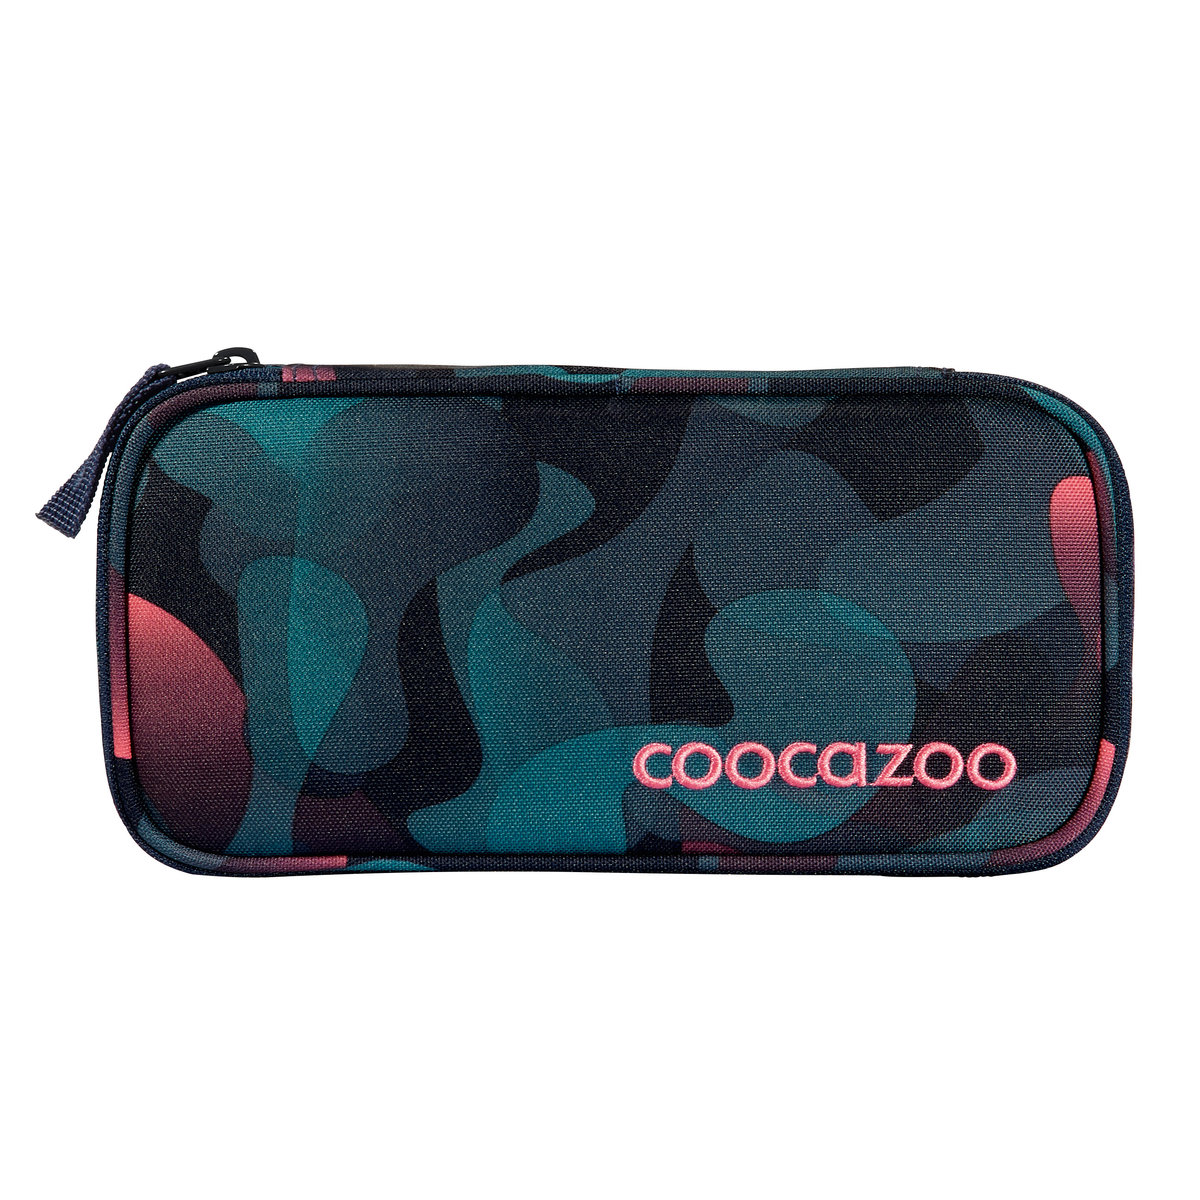 COOCAZOO 2.0 przybornik, kolor: Cloudy Peach